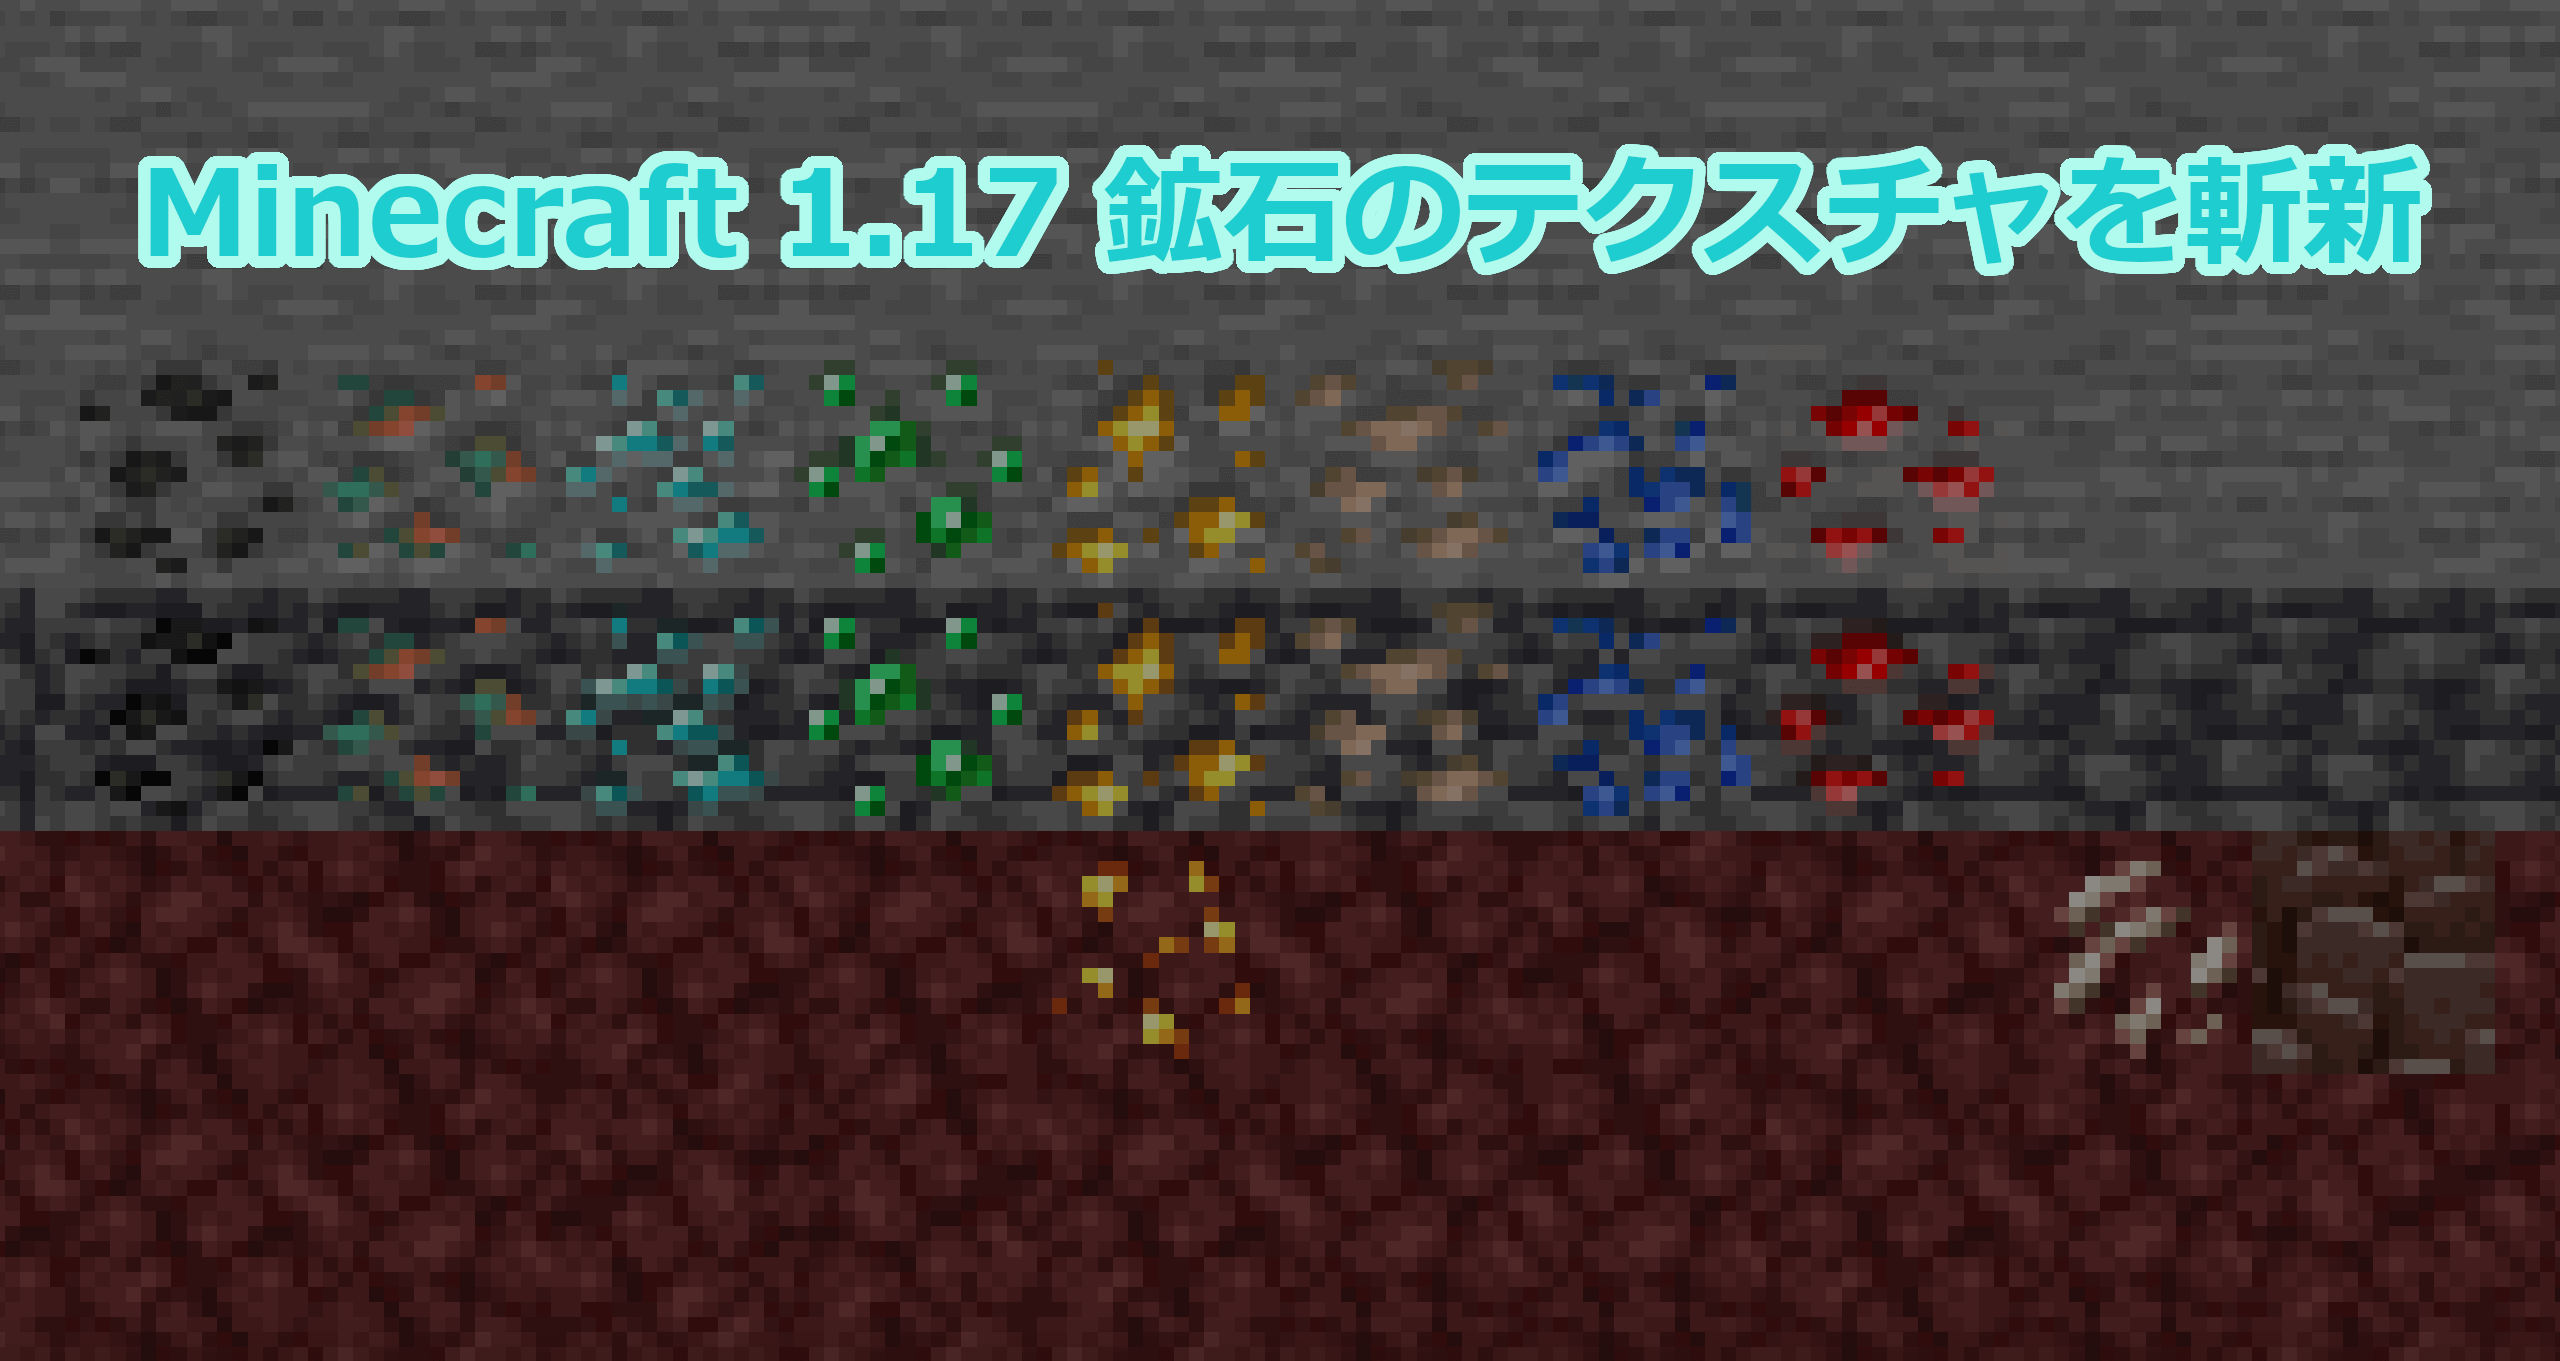 Minecraft 1.17で大きく変化した鉱石の見た目